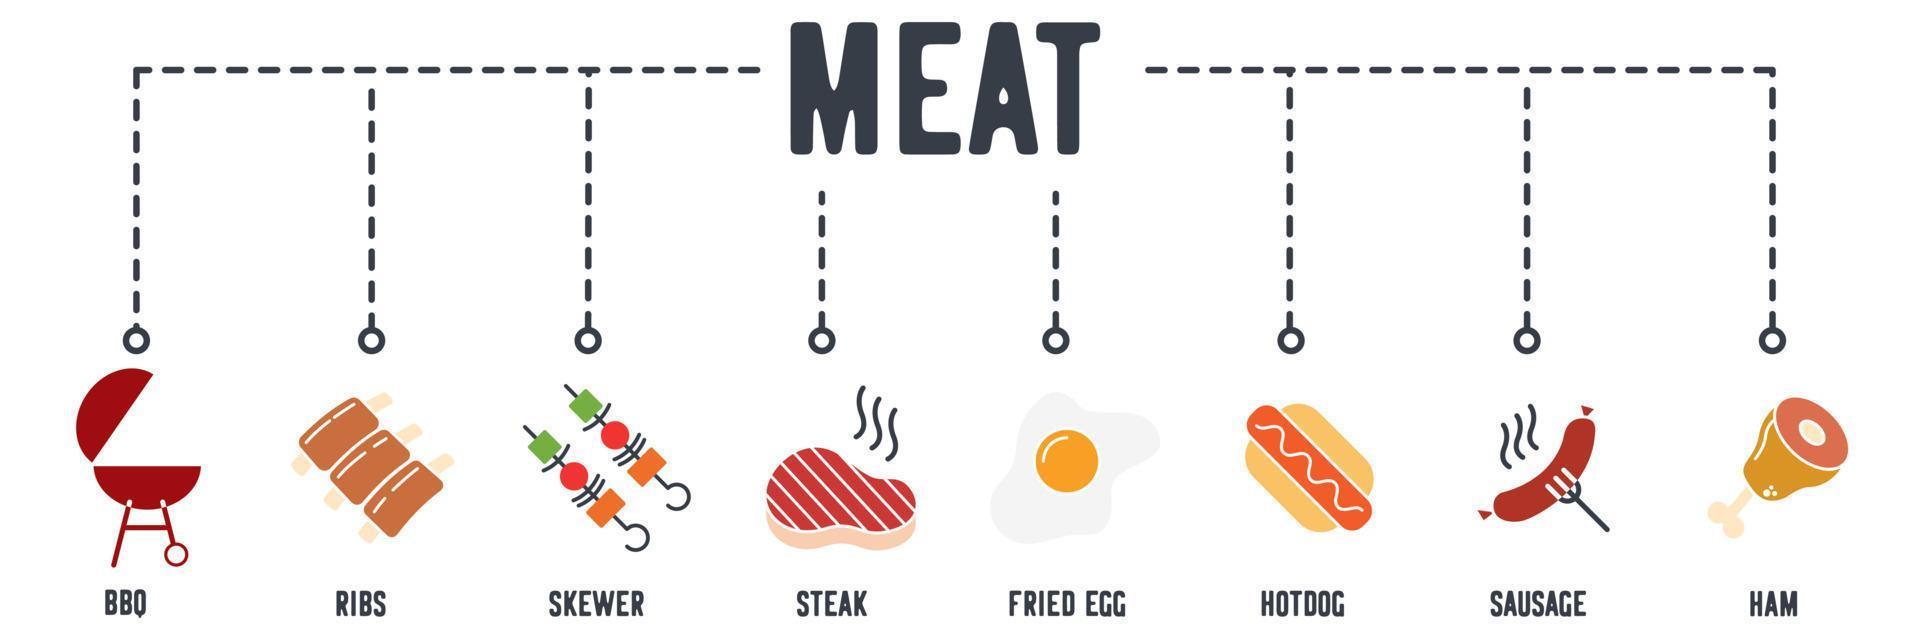 Meat products banner web icon. bbq, ribs, skewer, steak, fried egg, hotdog, sausage, ham vector illustration concept.